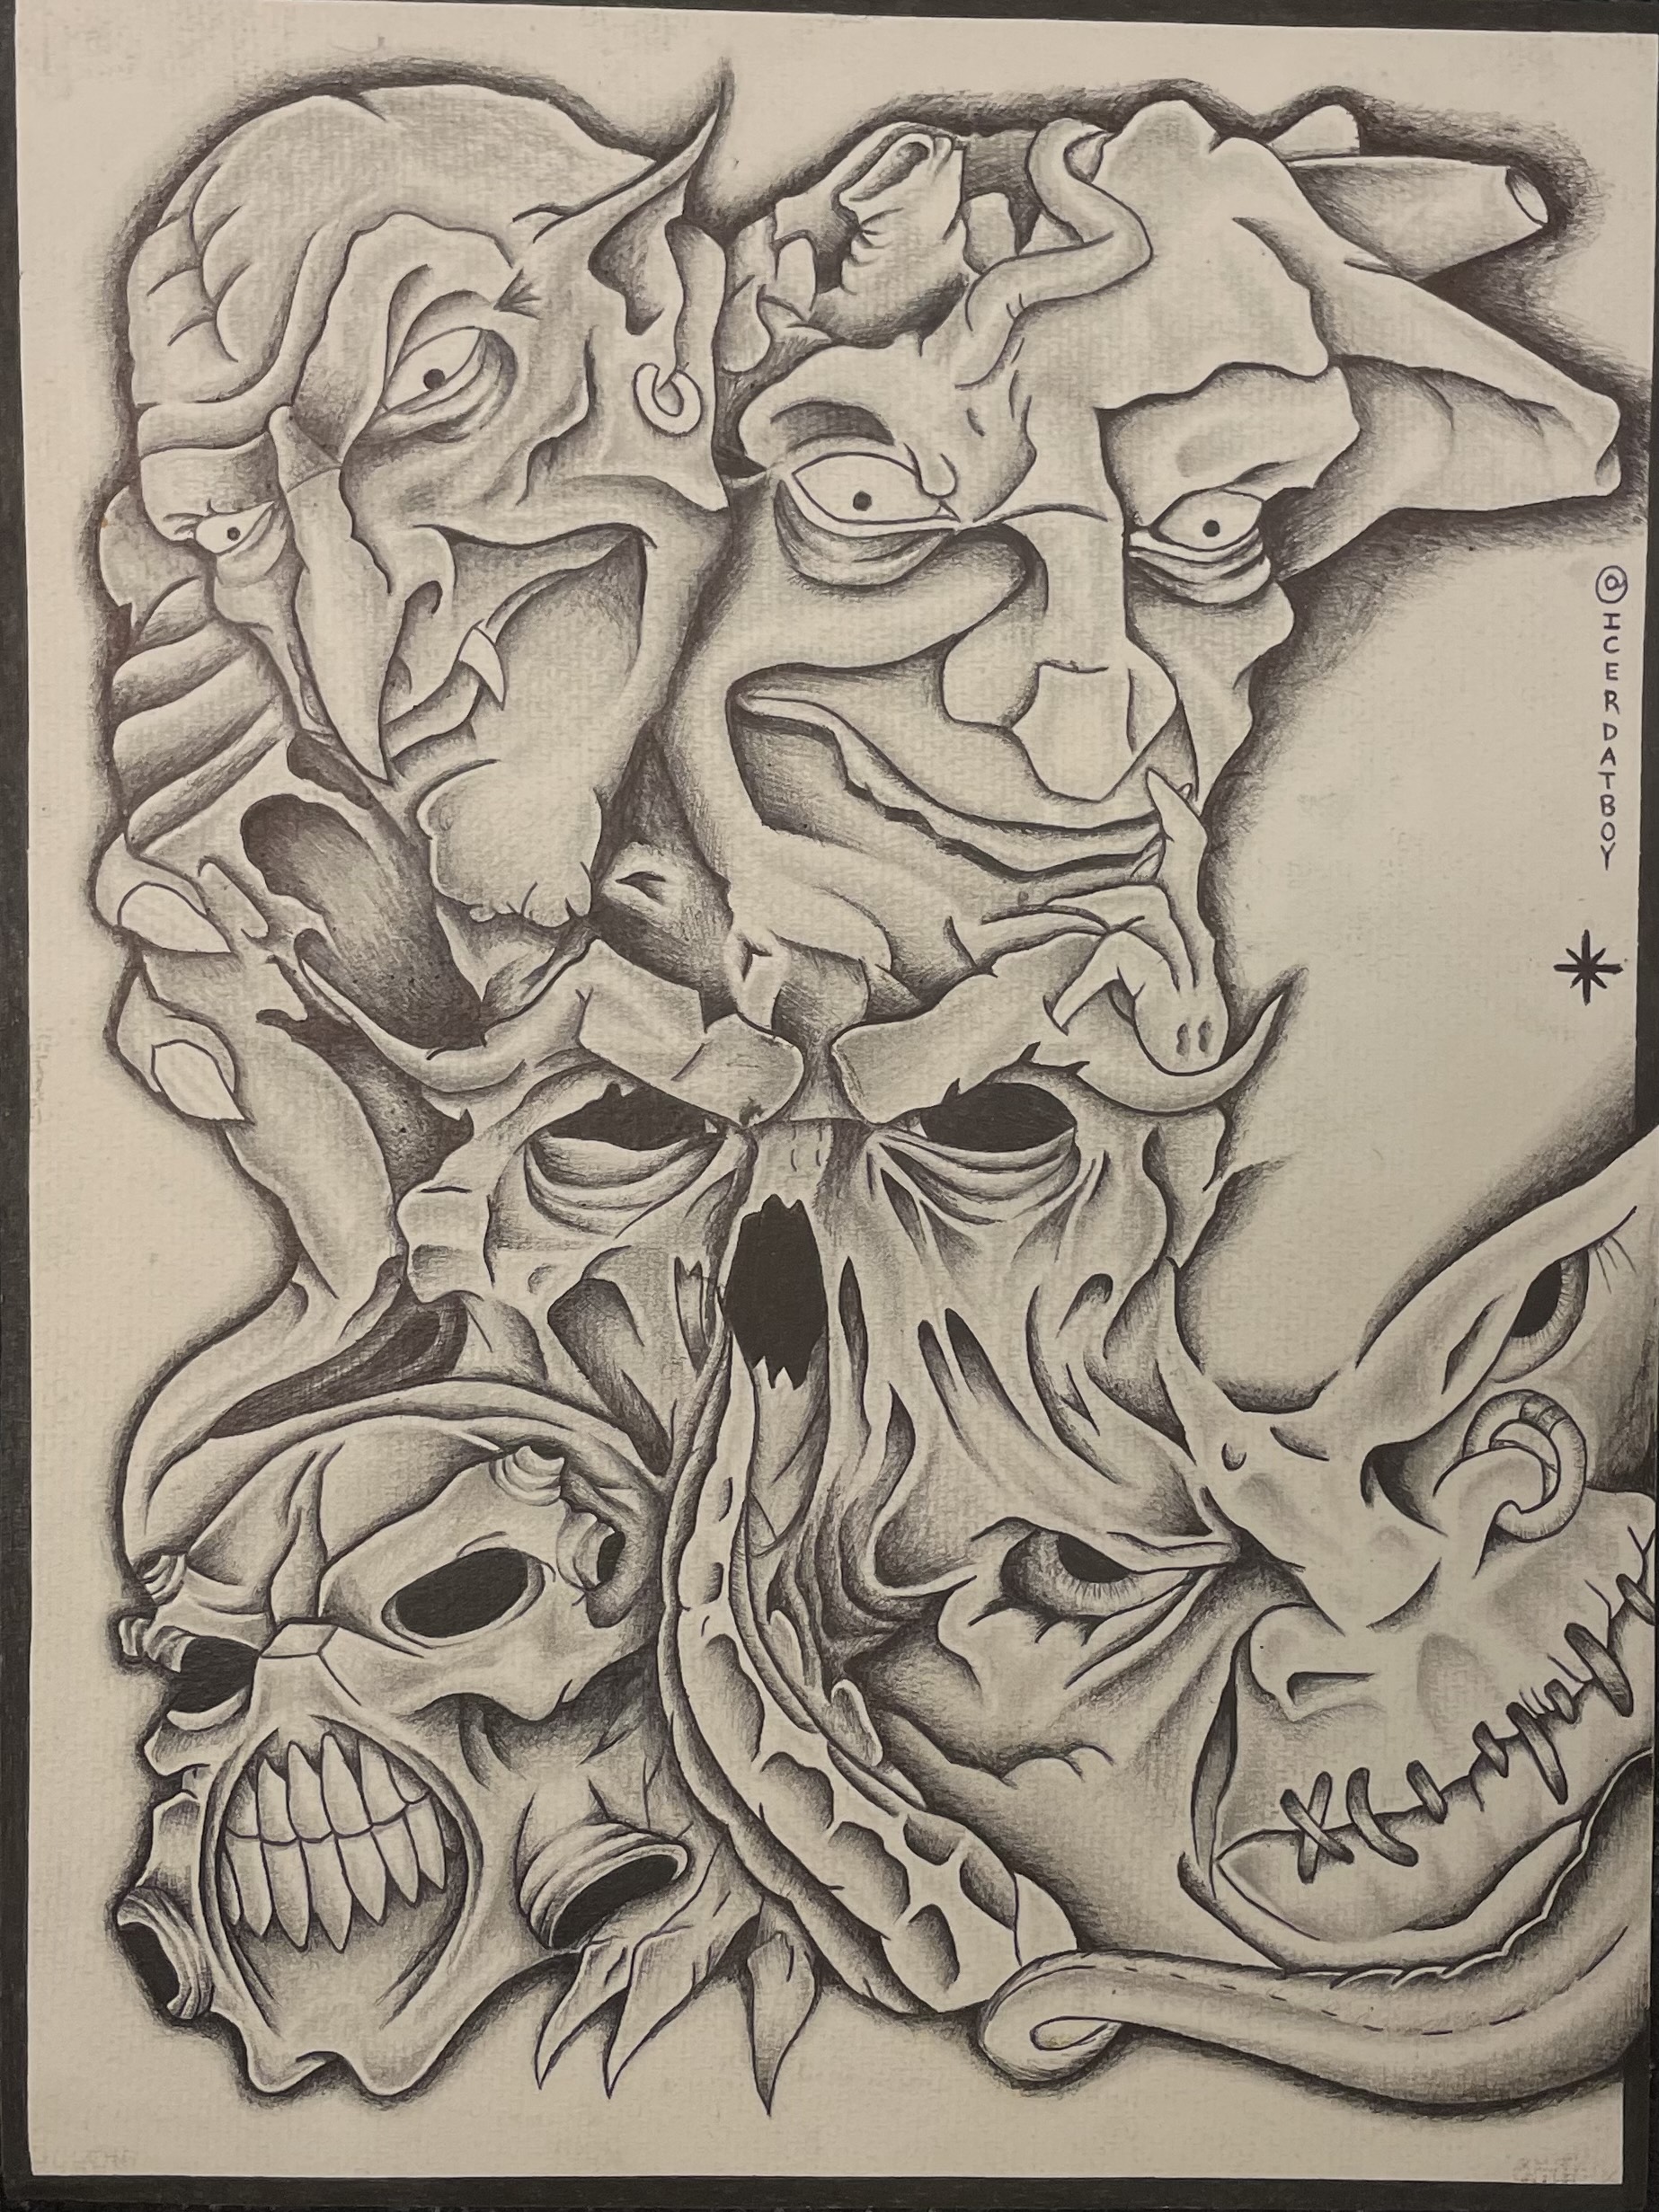 prison skull drawings